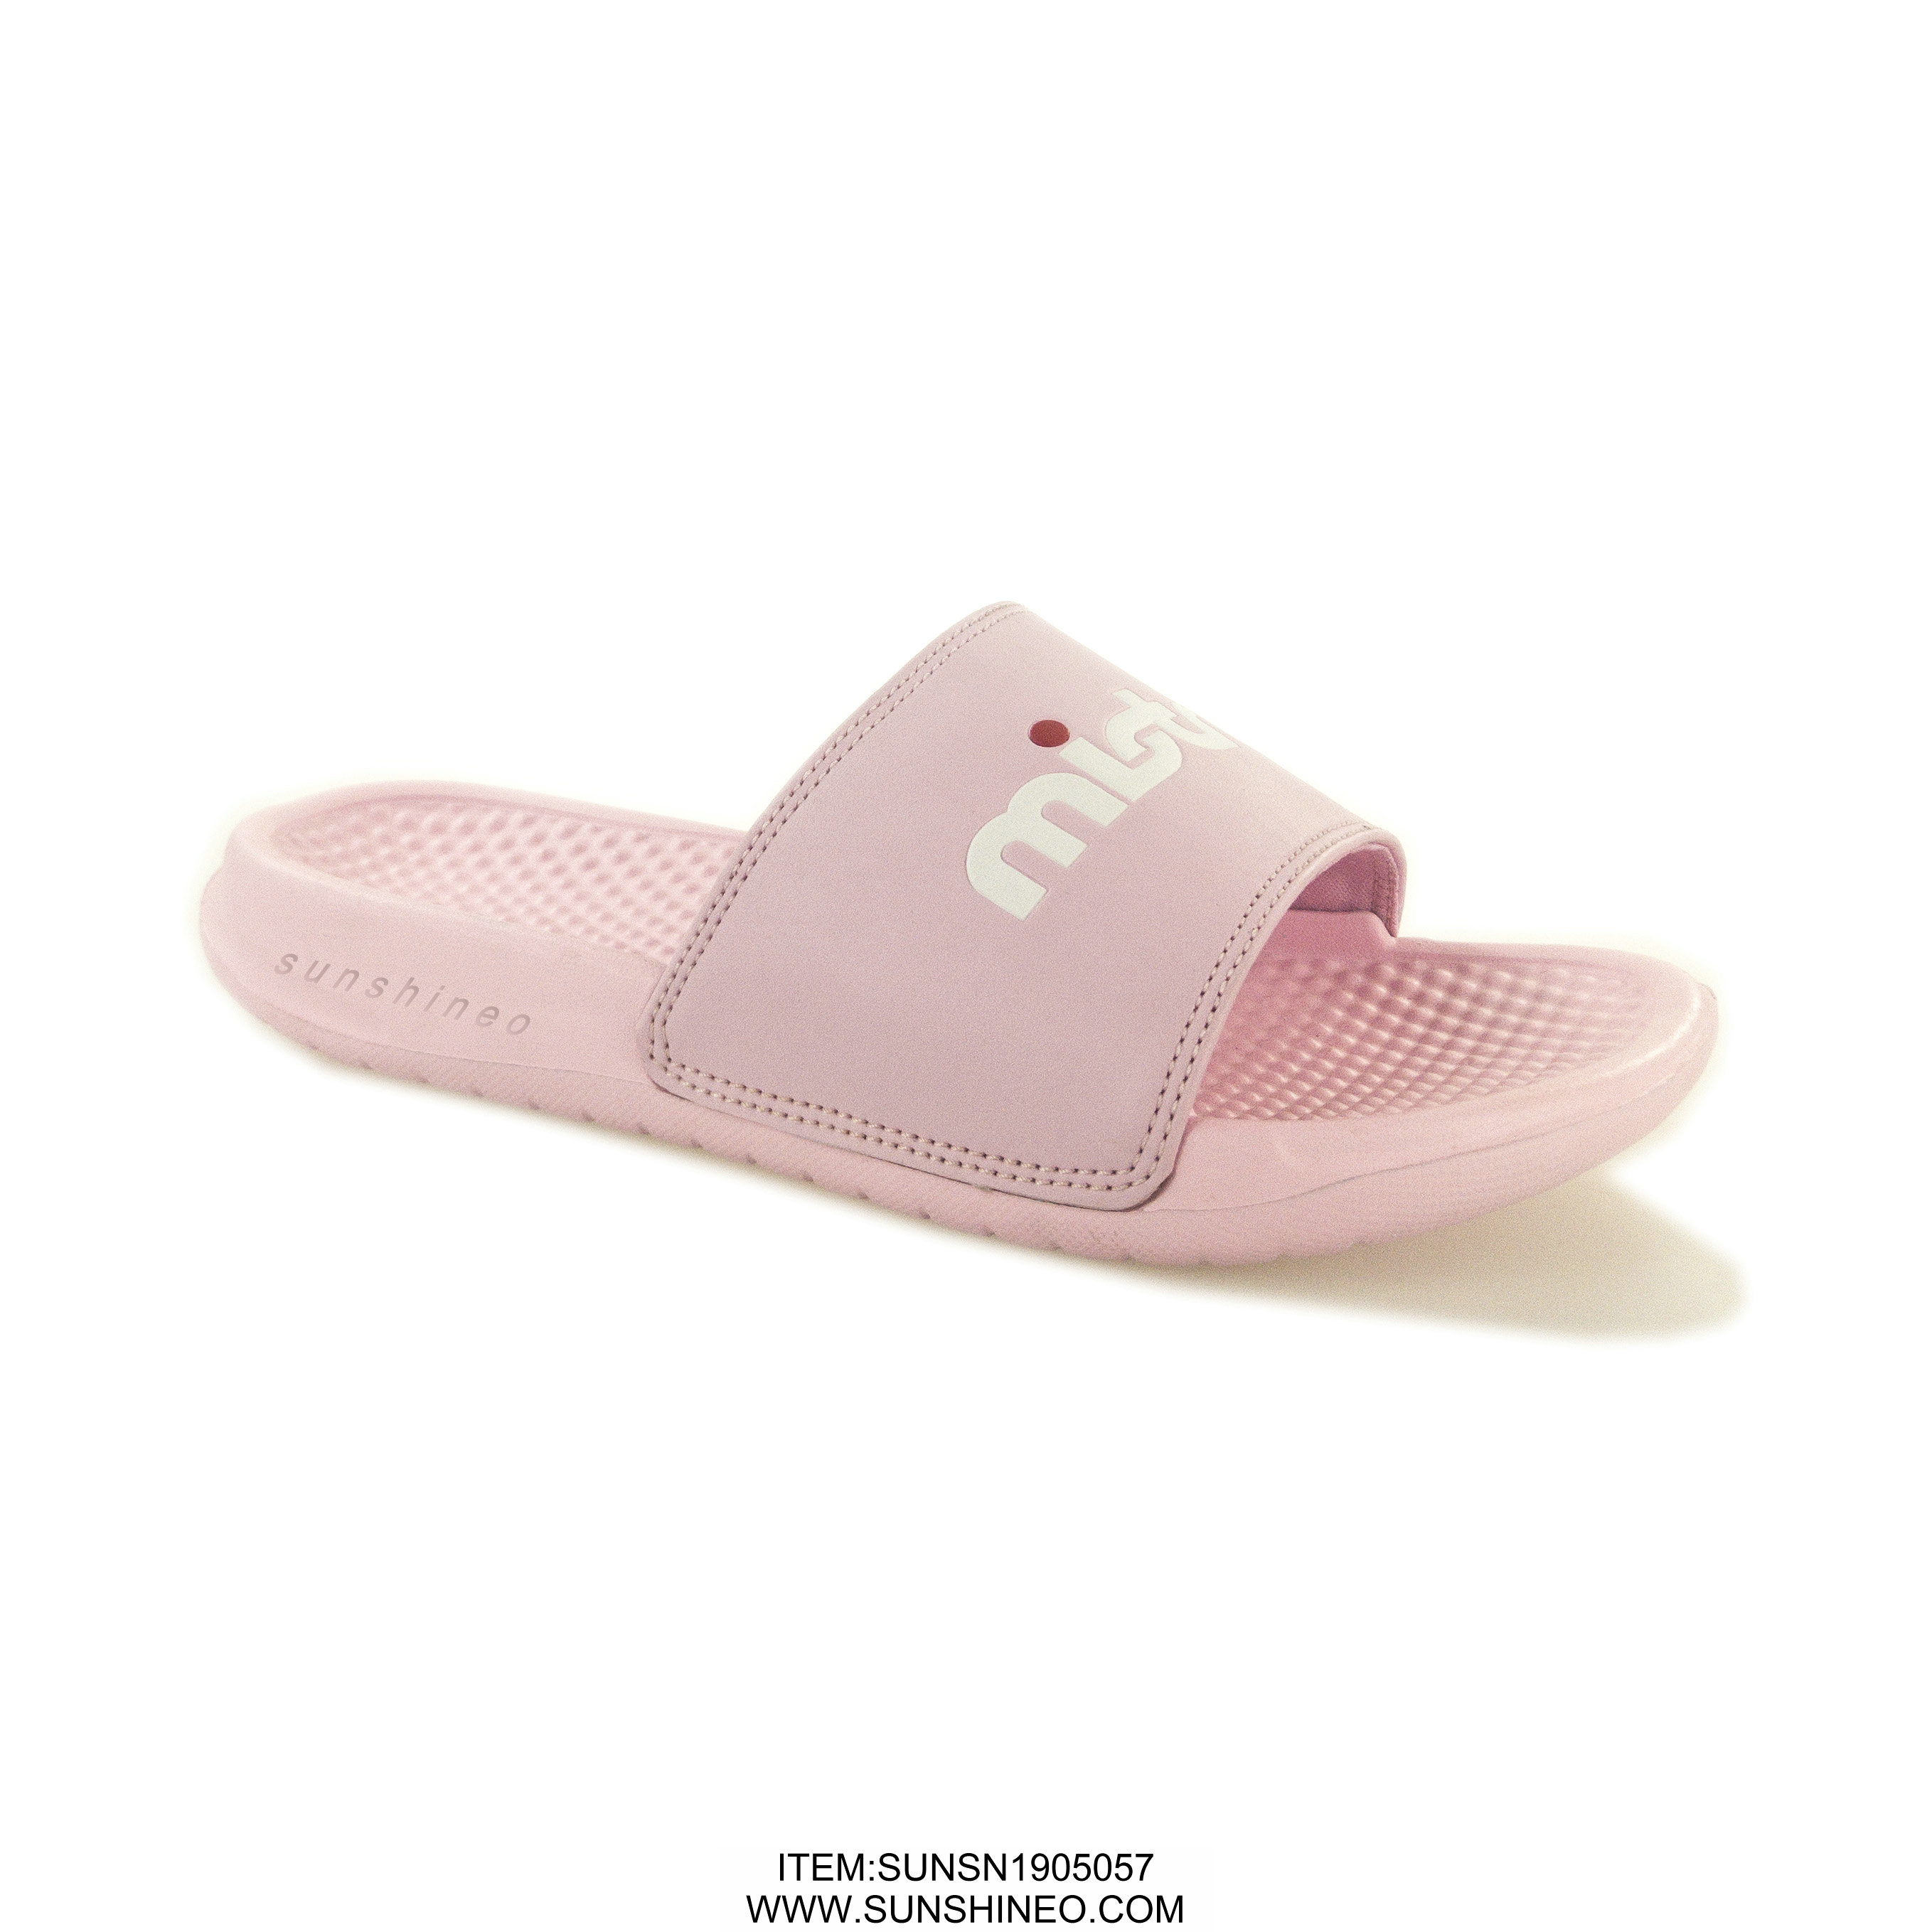 SUNSN1905053 Slipper pink - Sunshineo shoe factory